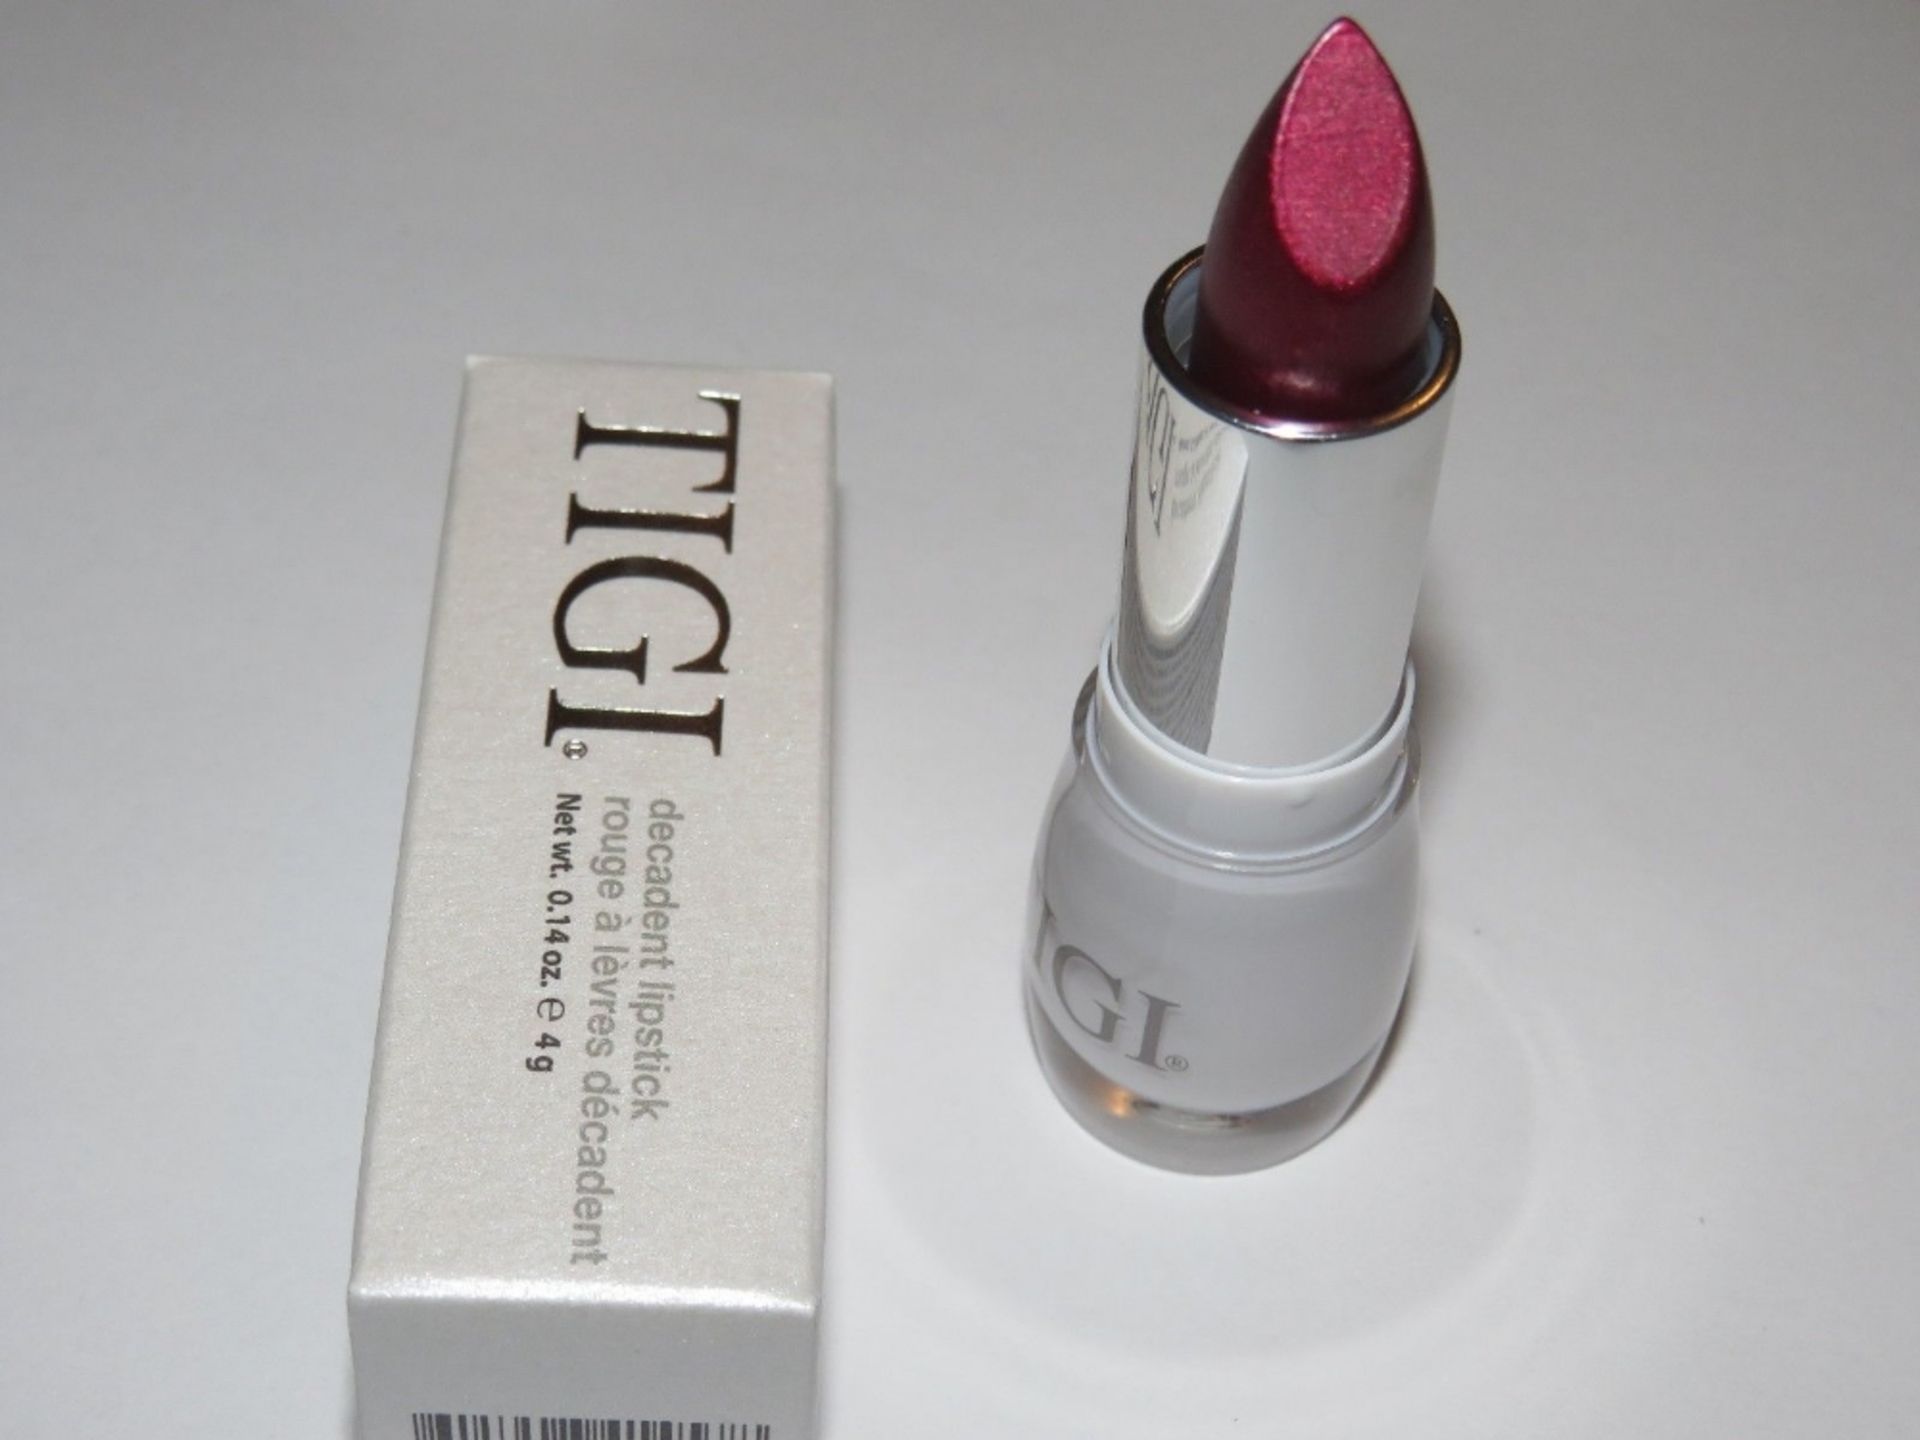 200 x tigi boxed lipsticks- Brand new – NO VAT + FREE DELIVERY